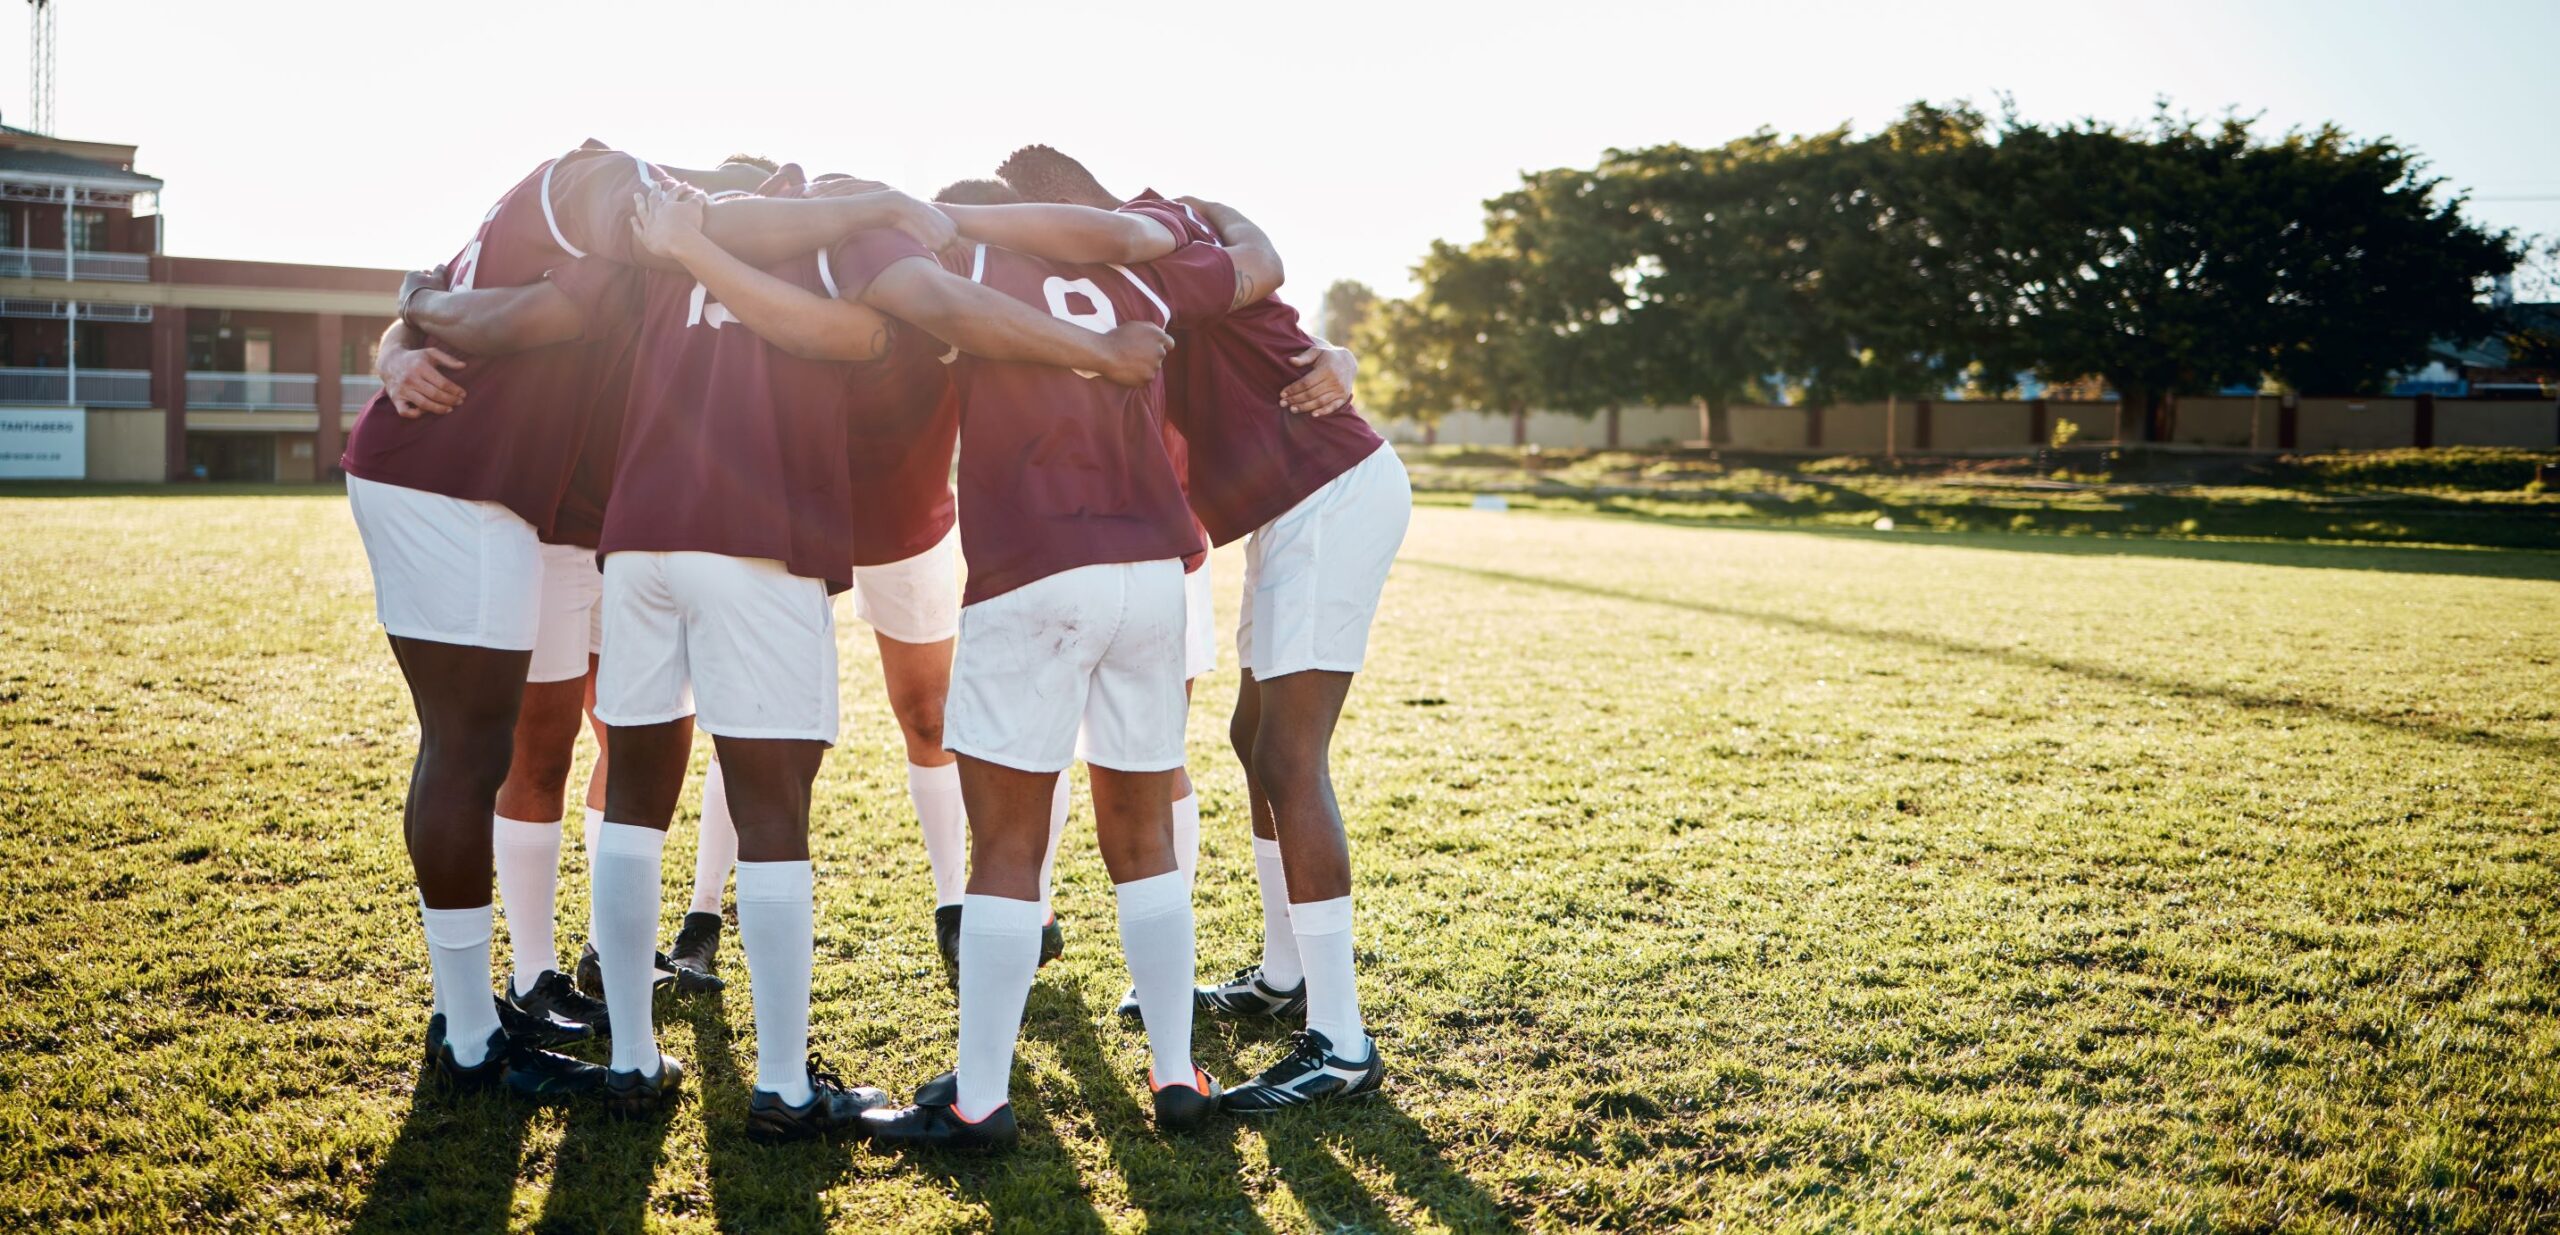 A group of men huddle on a sports field. 